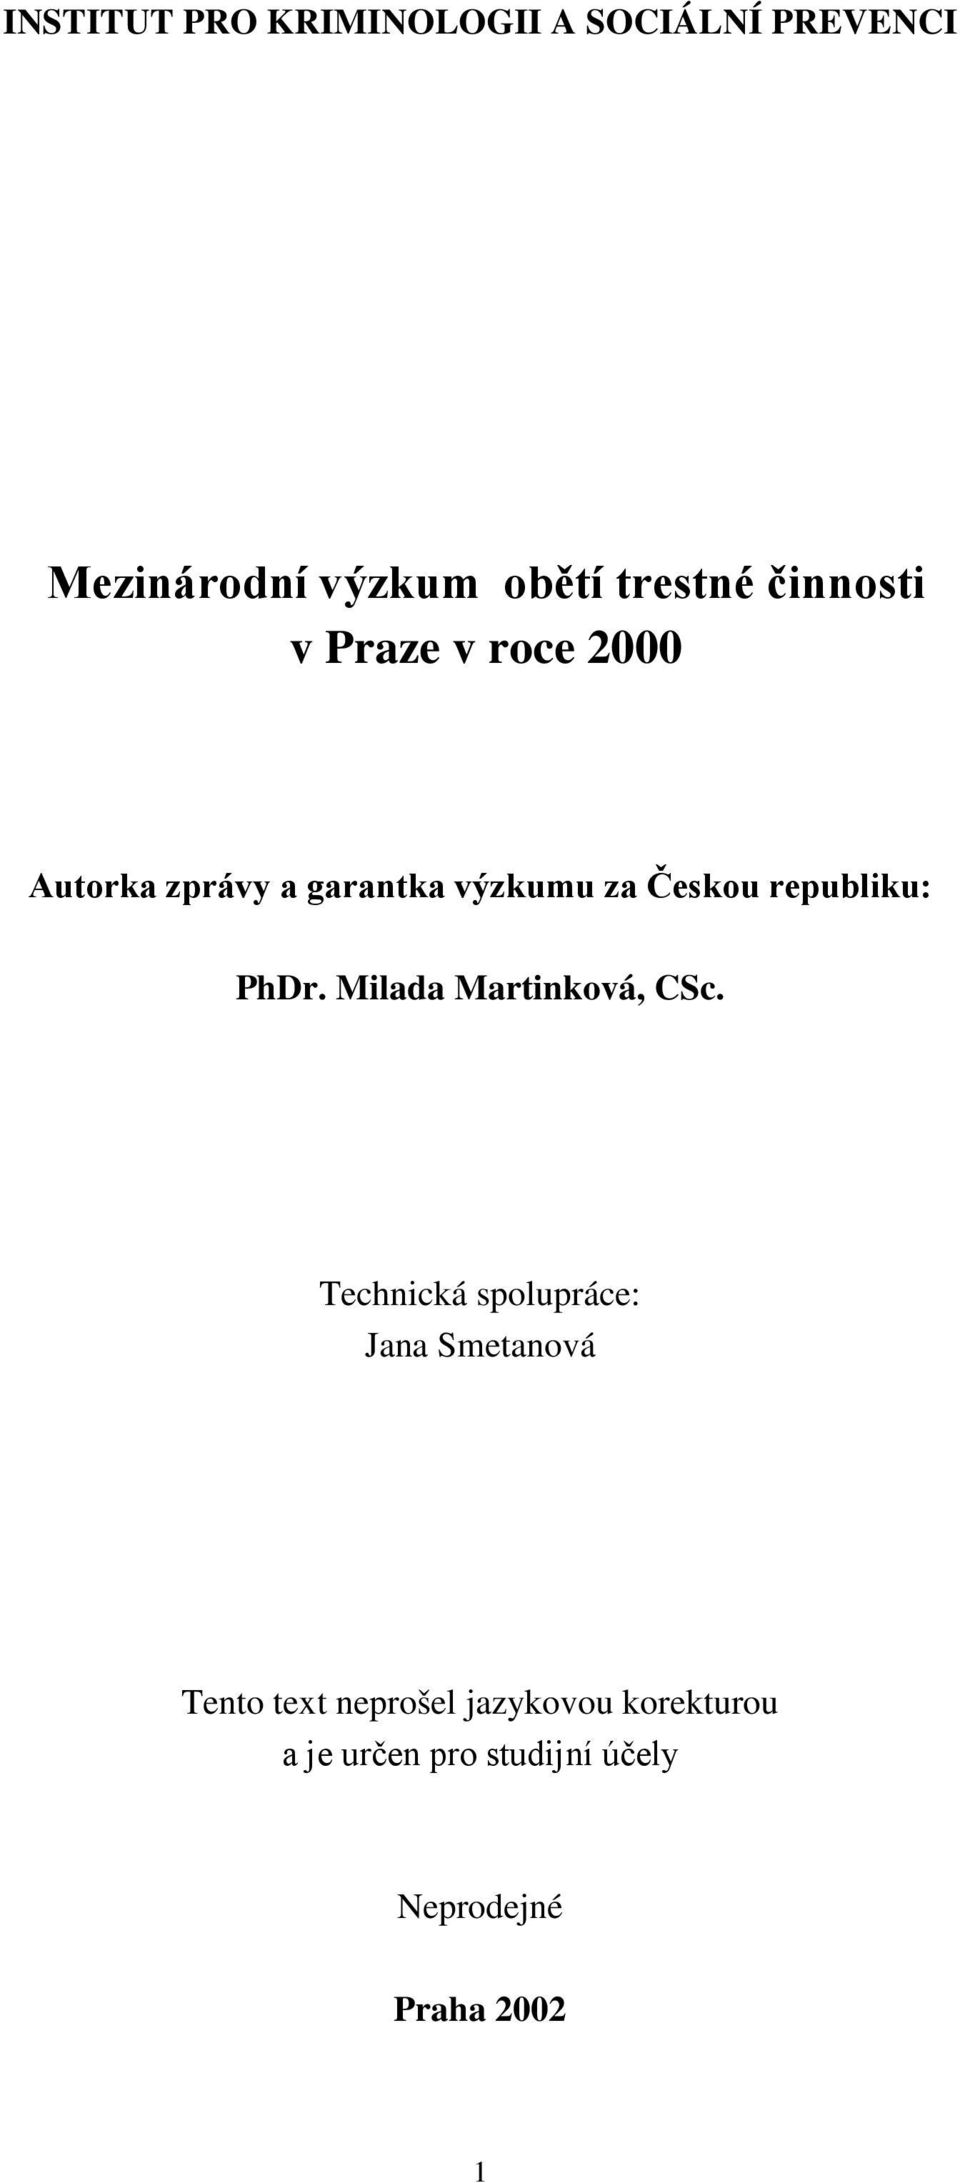 republiku: PhDr. Milada Martinková, CSc.